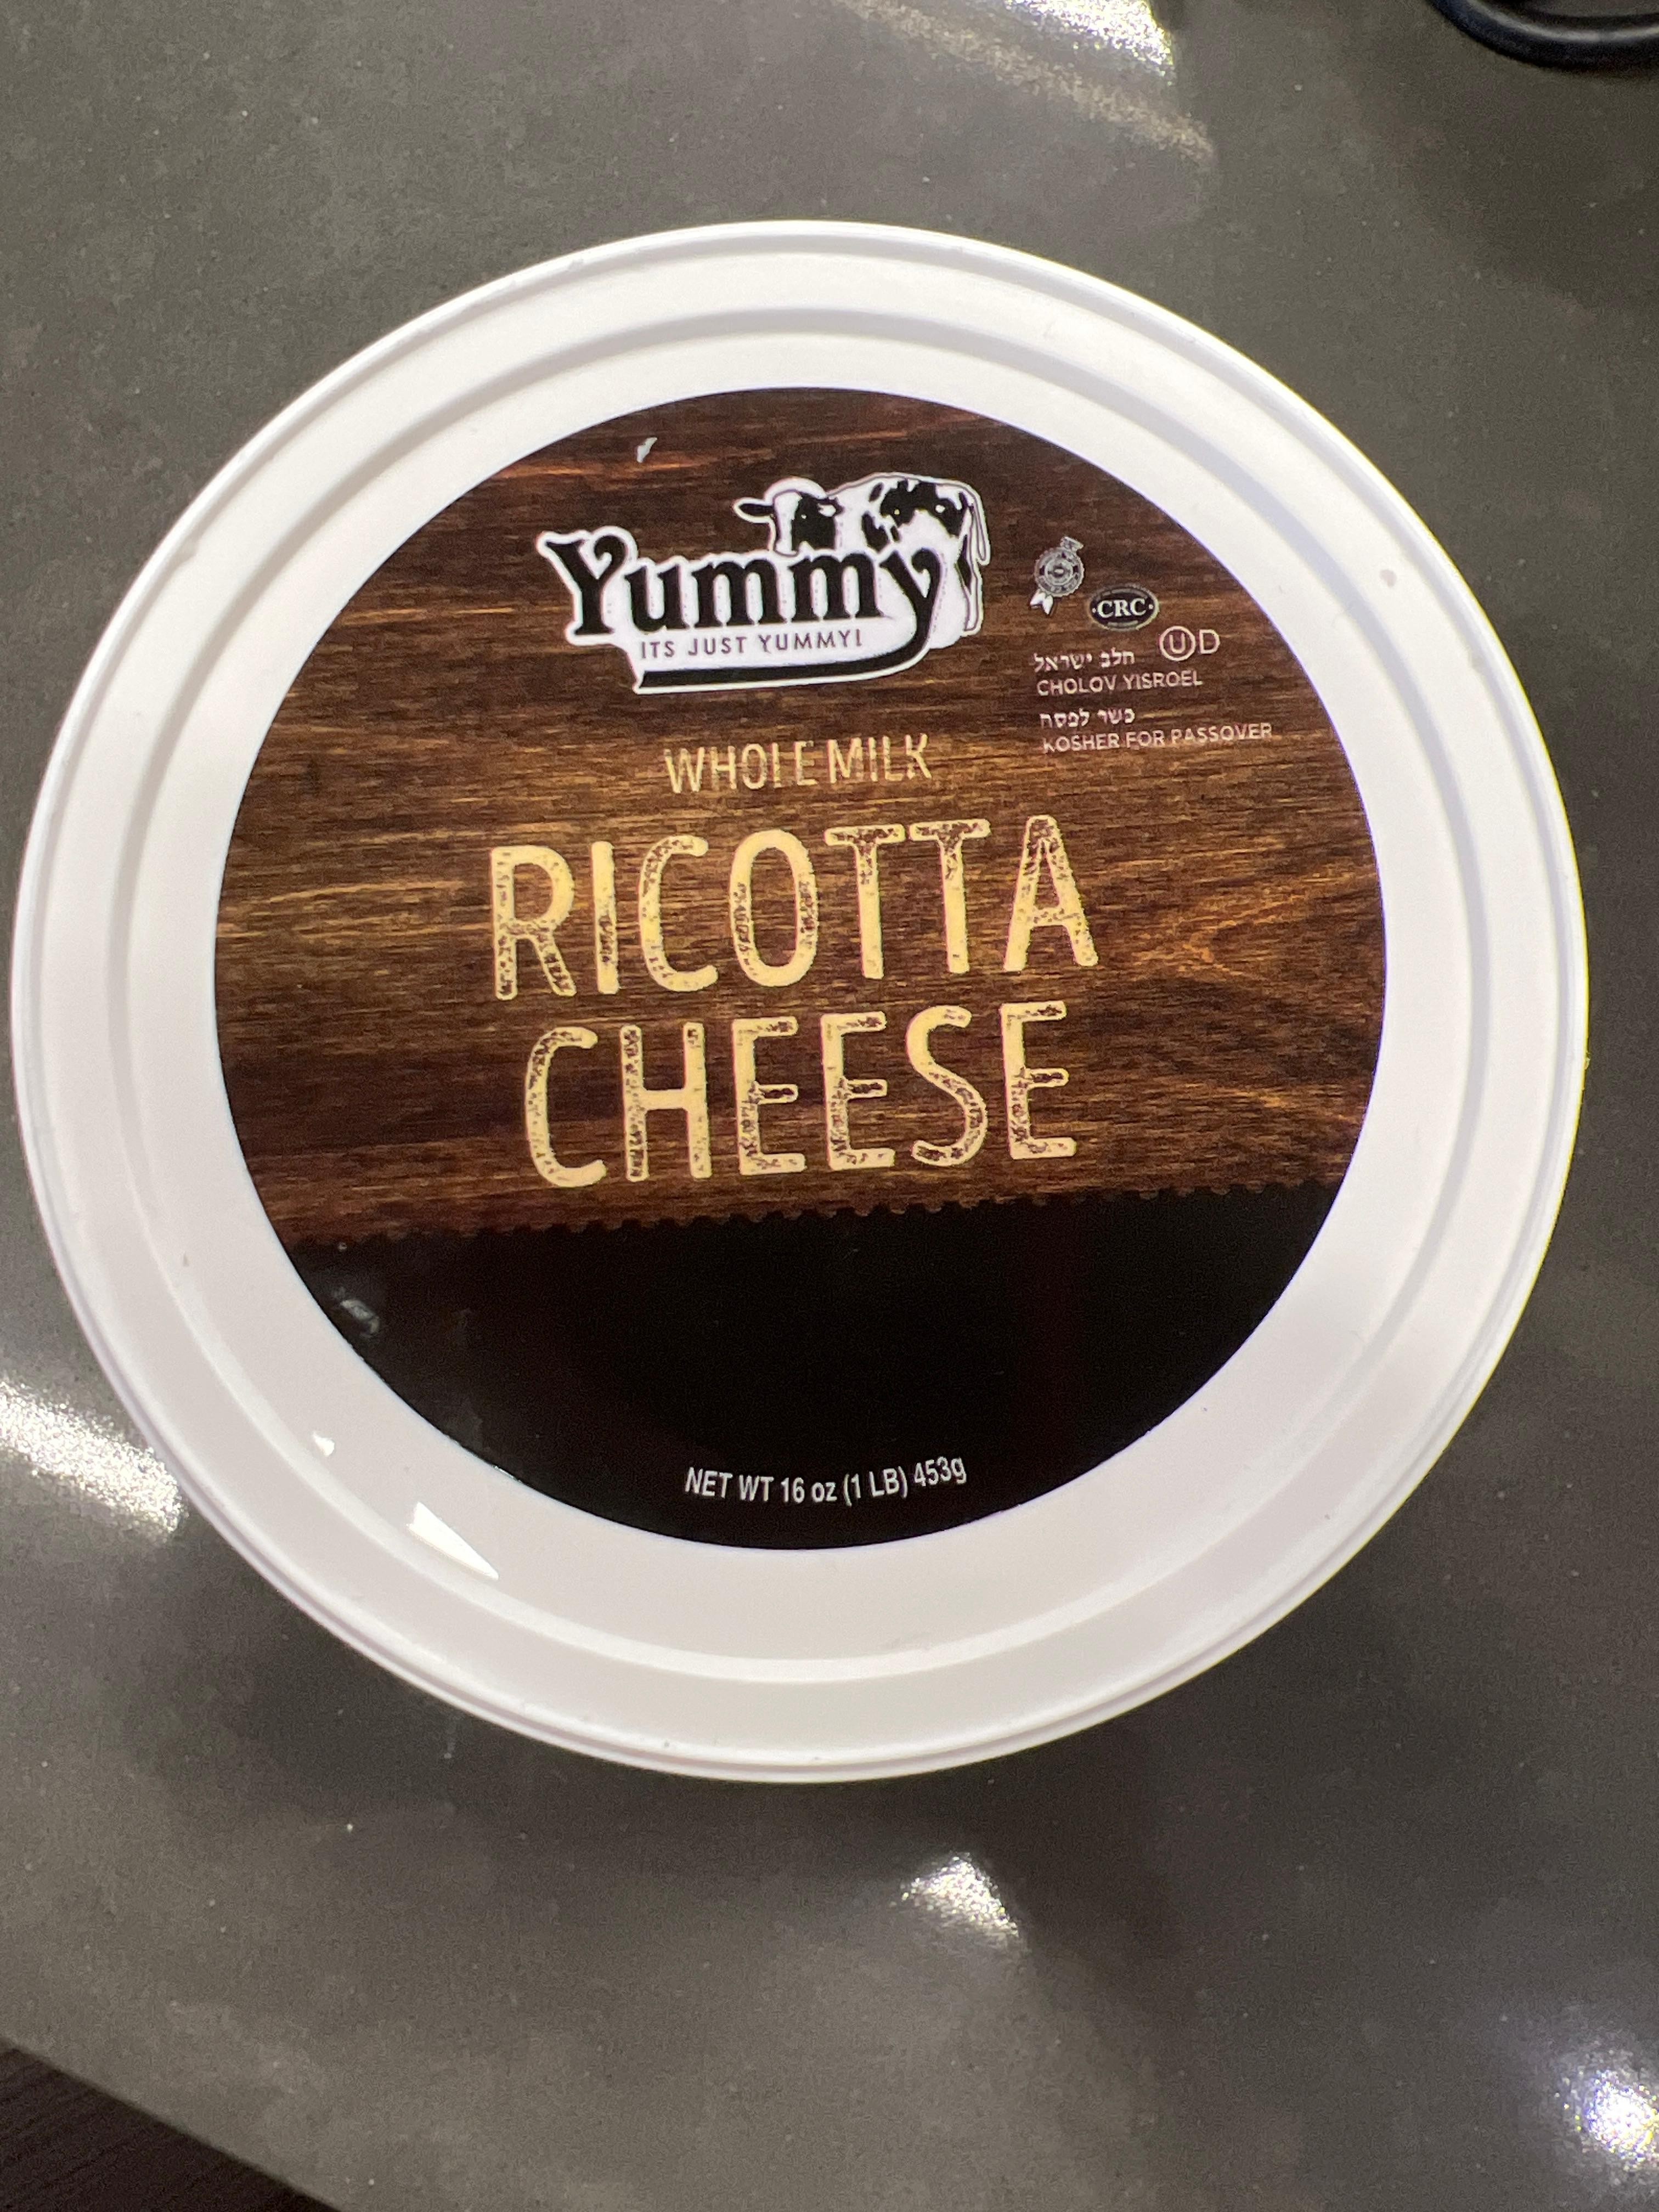 Yummy Whole Milk Ricotta Cheese